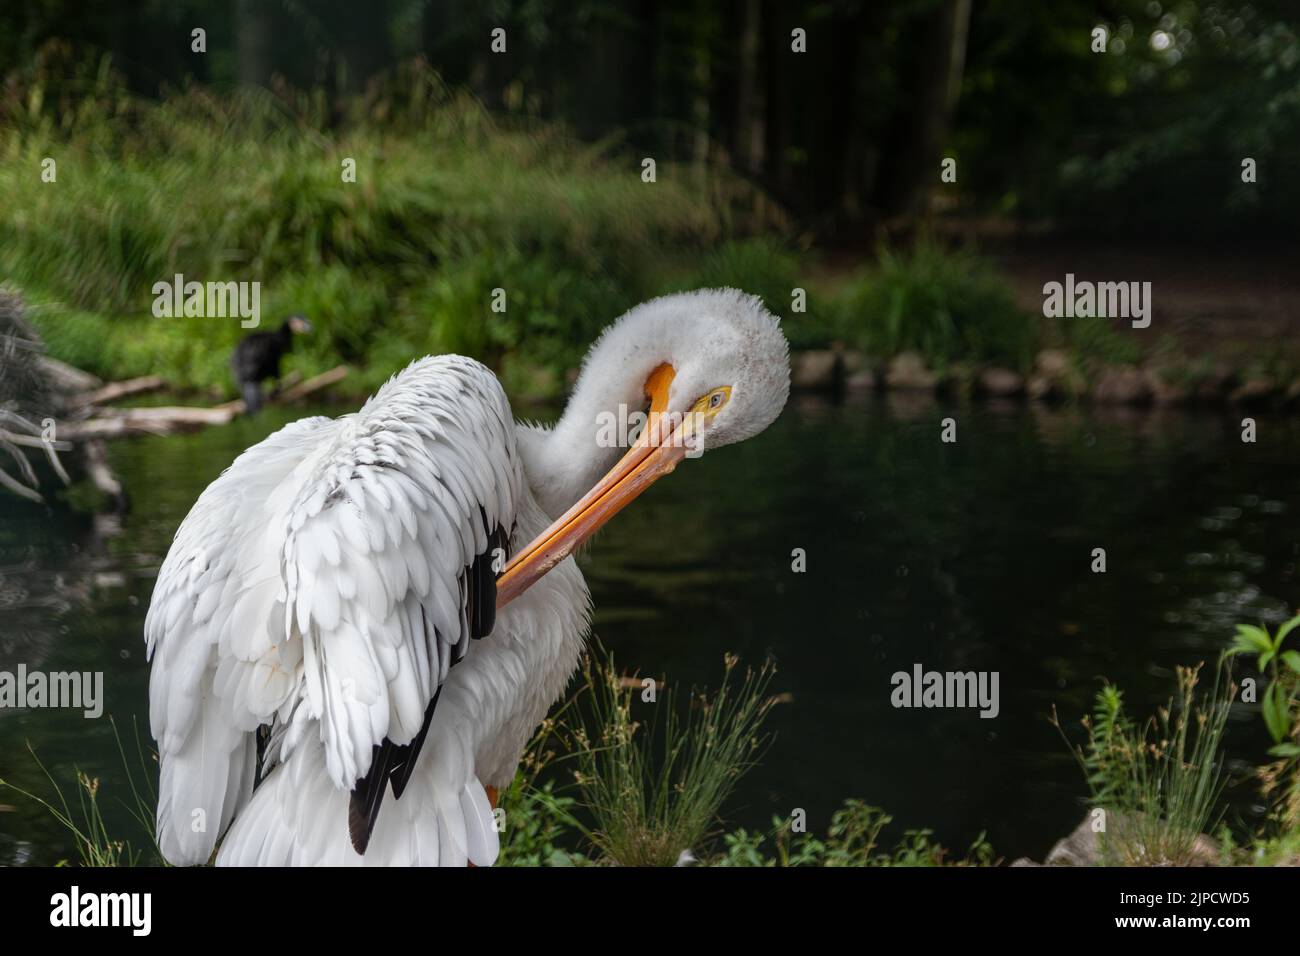 Uccello bianco con becco lungo | Pelican | Weißer Vogel mit langem Schnabel | Pelikan Foto Stock